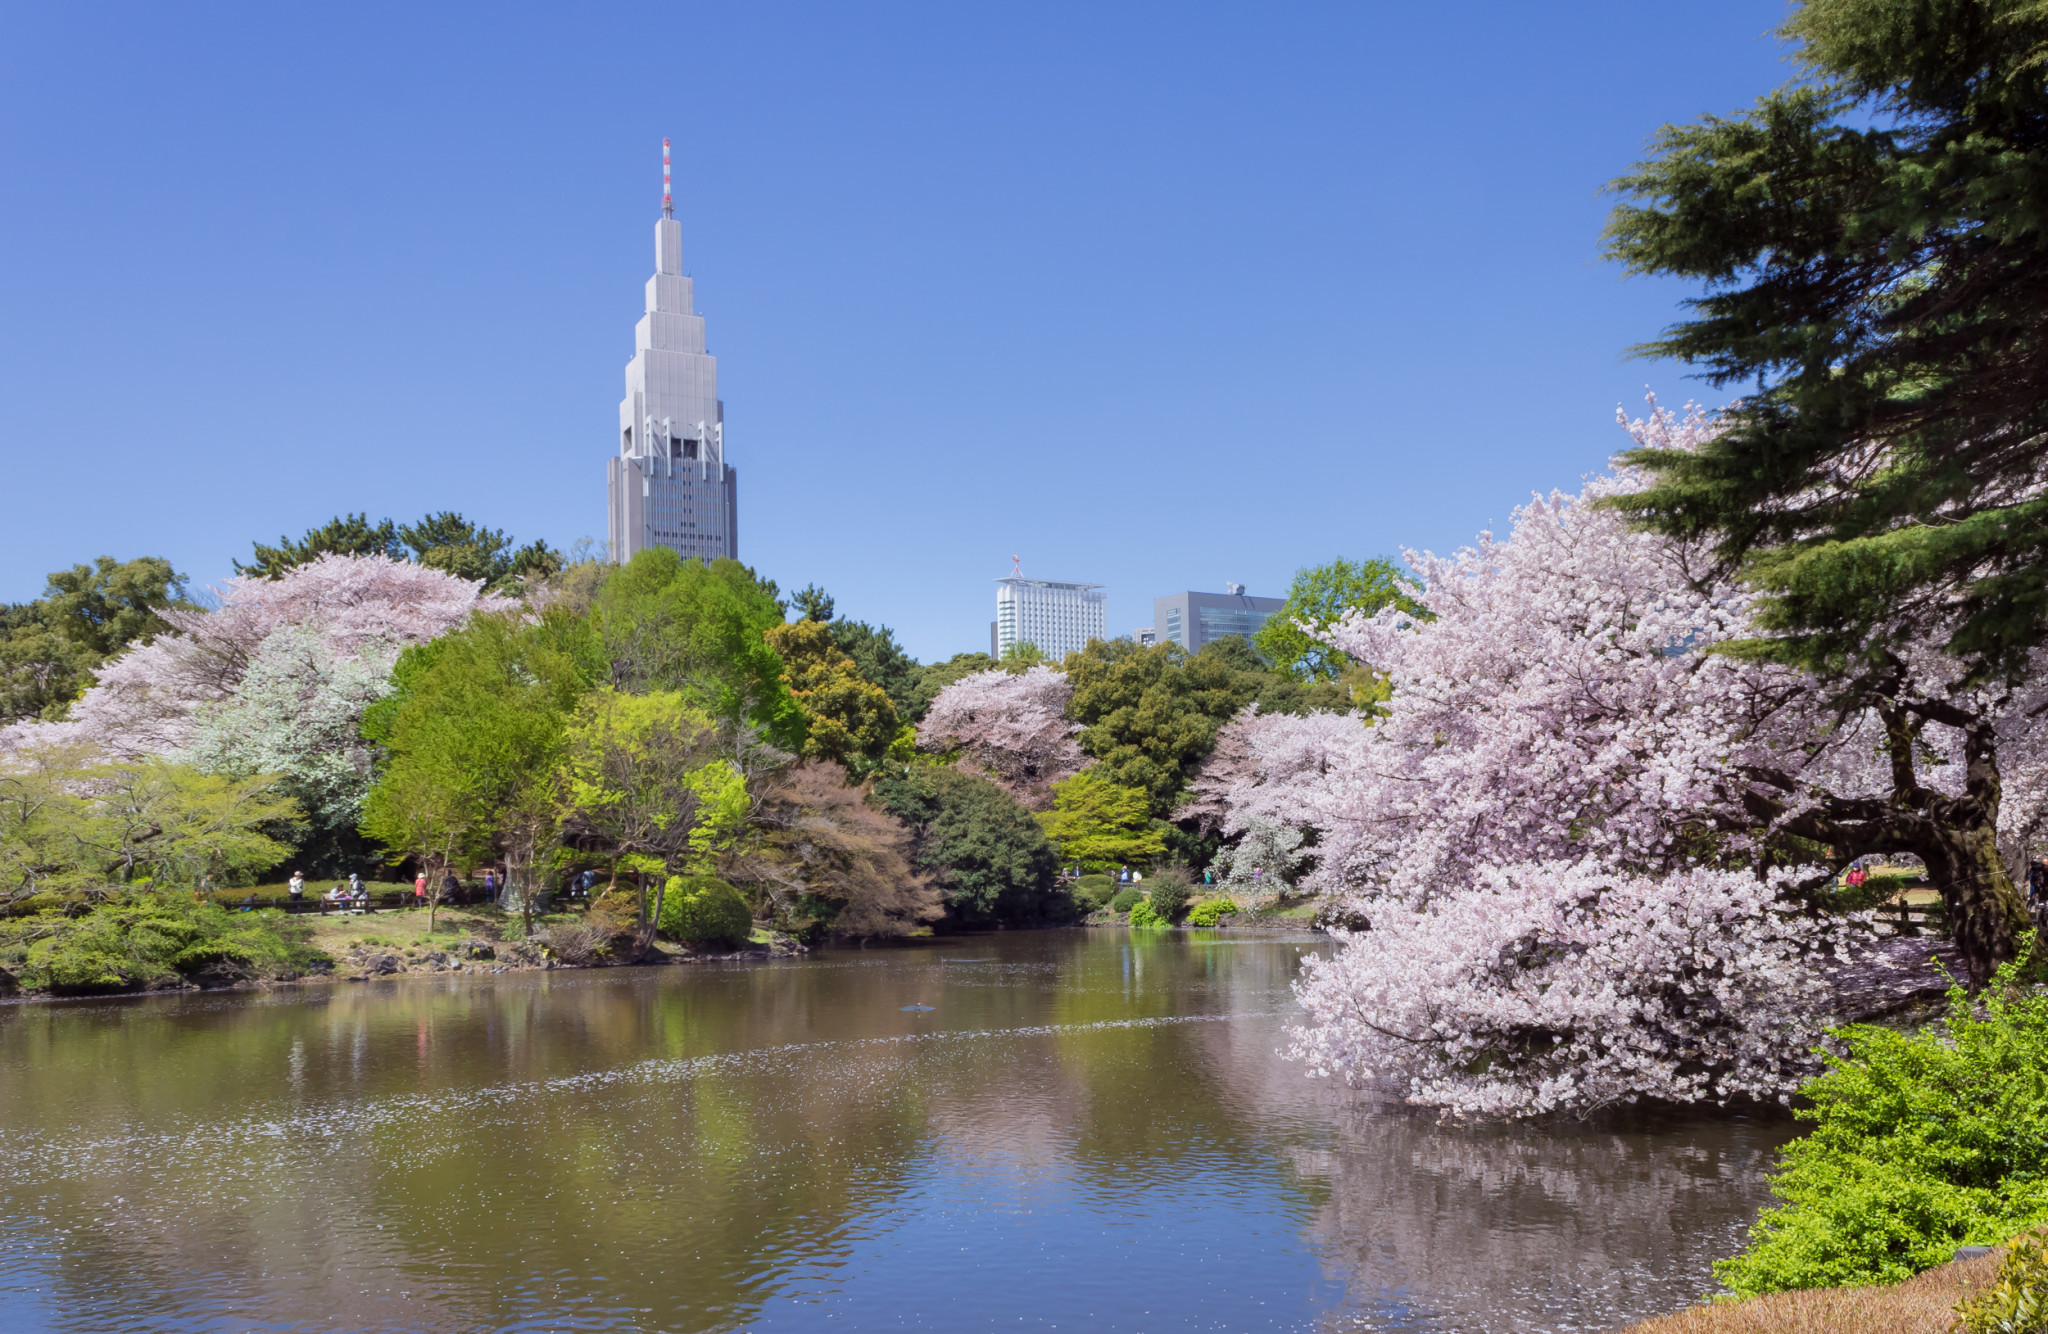 The festival will take place in the Landscape Garden at Shinjuku Gyoen National Garden in Tokyo ©Wikipedia